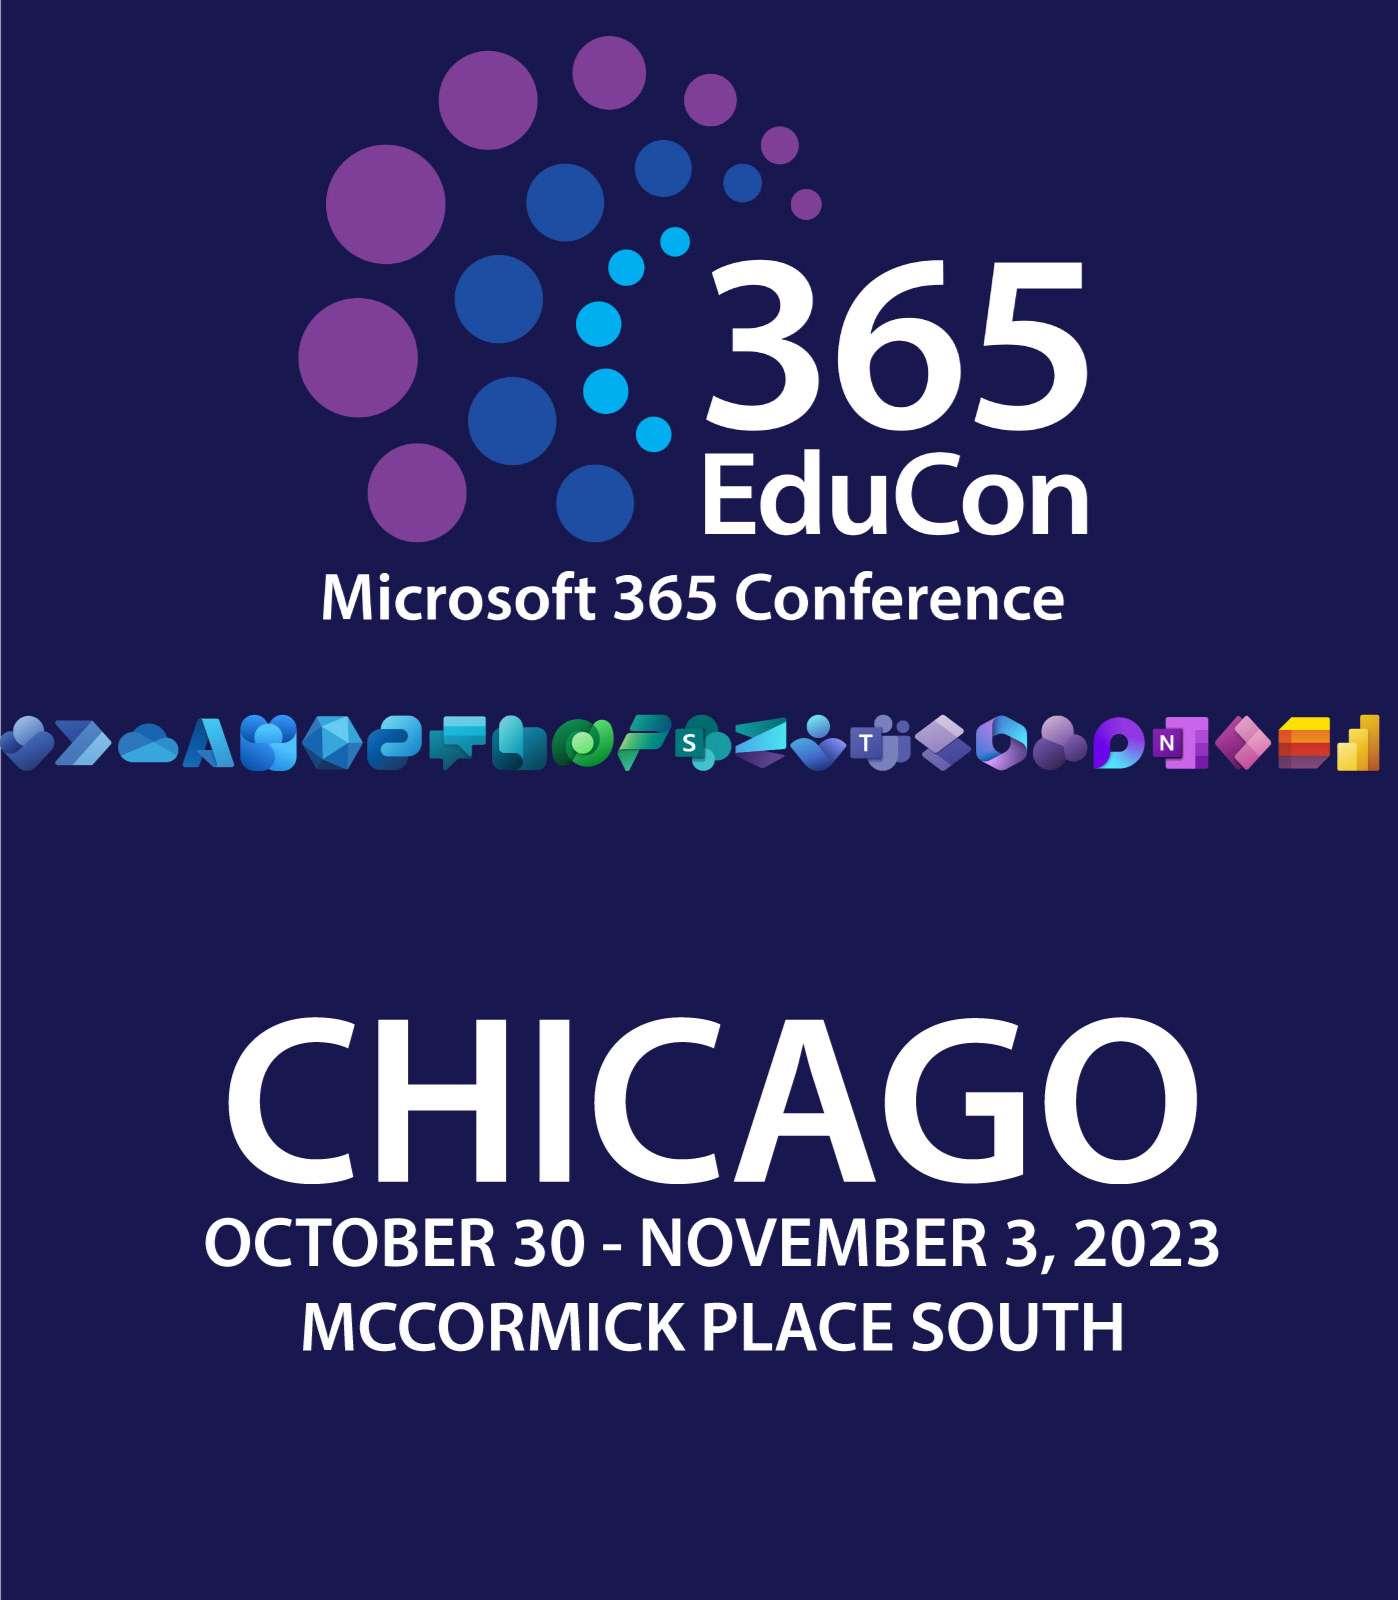 365 EduCon Chicago - A Microsoft 365 Conference